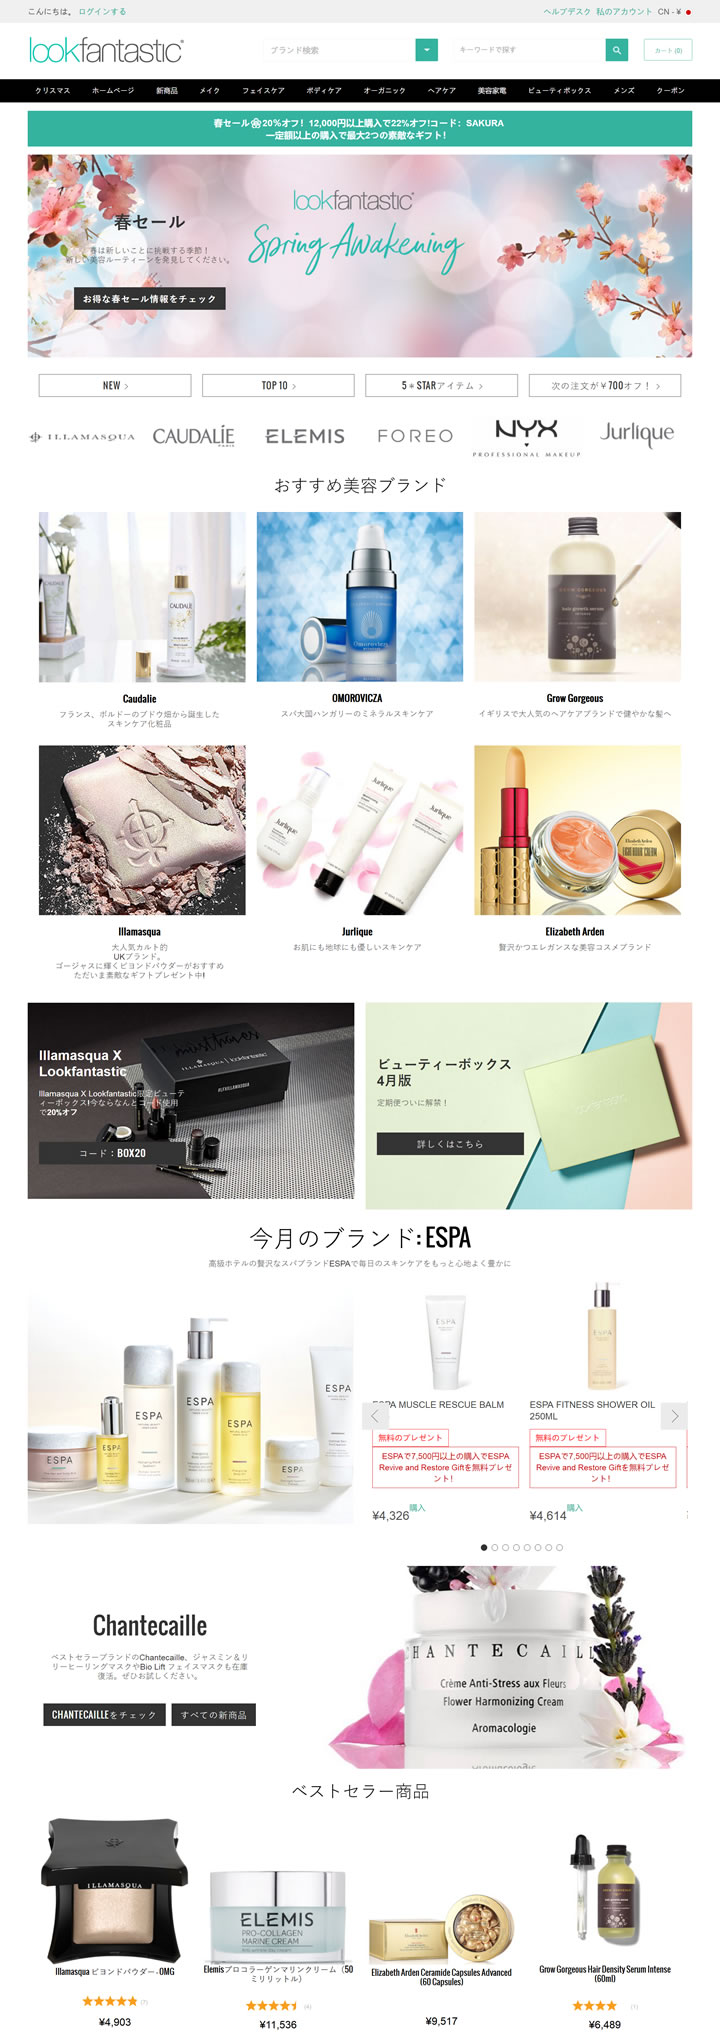 Lookfantastic日本官网：英国知名护肤、化妆品和头发护理购物网站